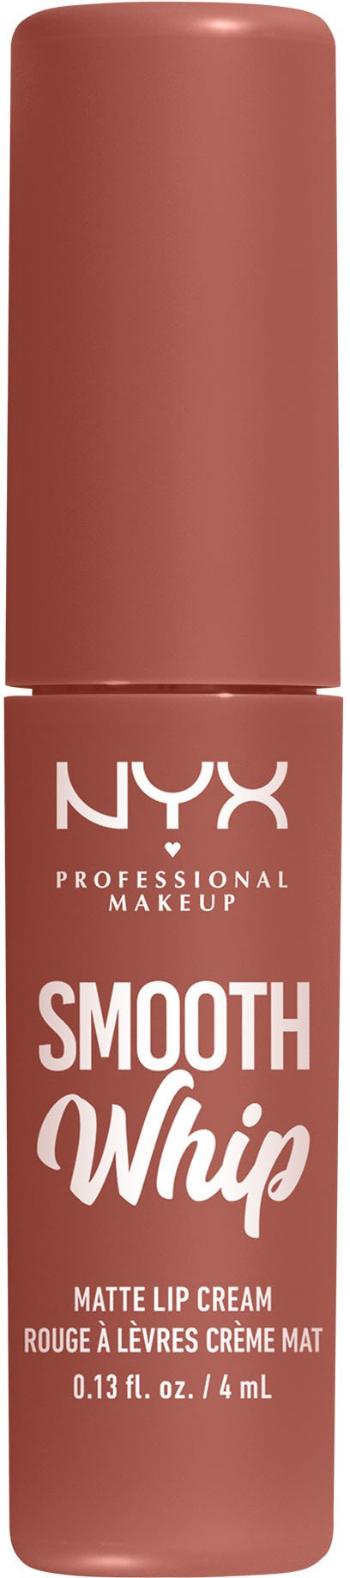 NYX Professional Makeup Smooth Whip Matte Lip Cream 04 Teddy Fluff matný tekutý rúž, 4 ml